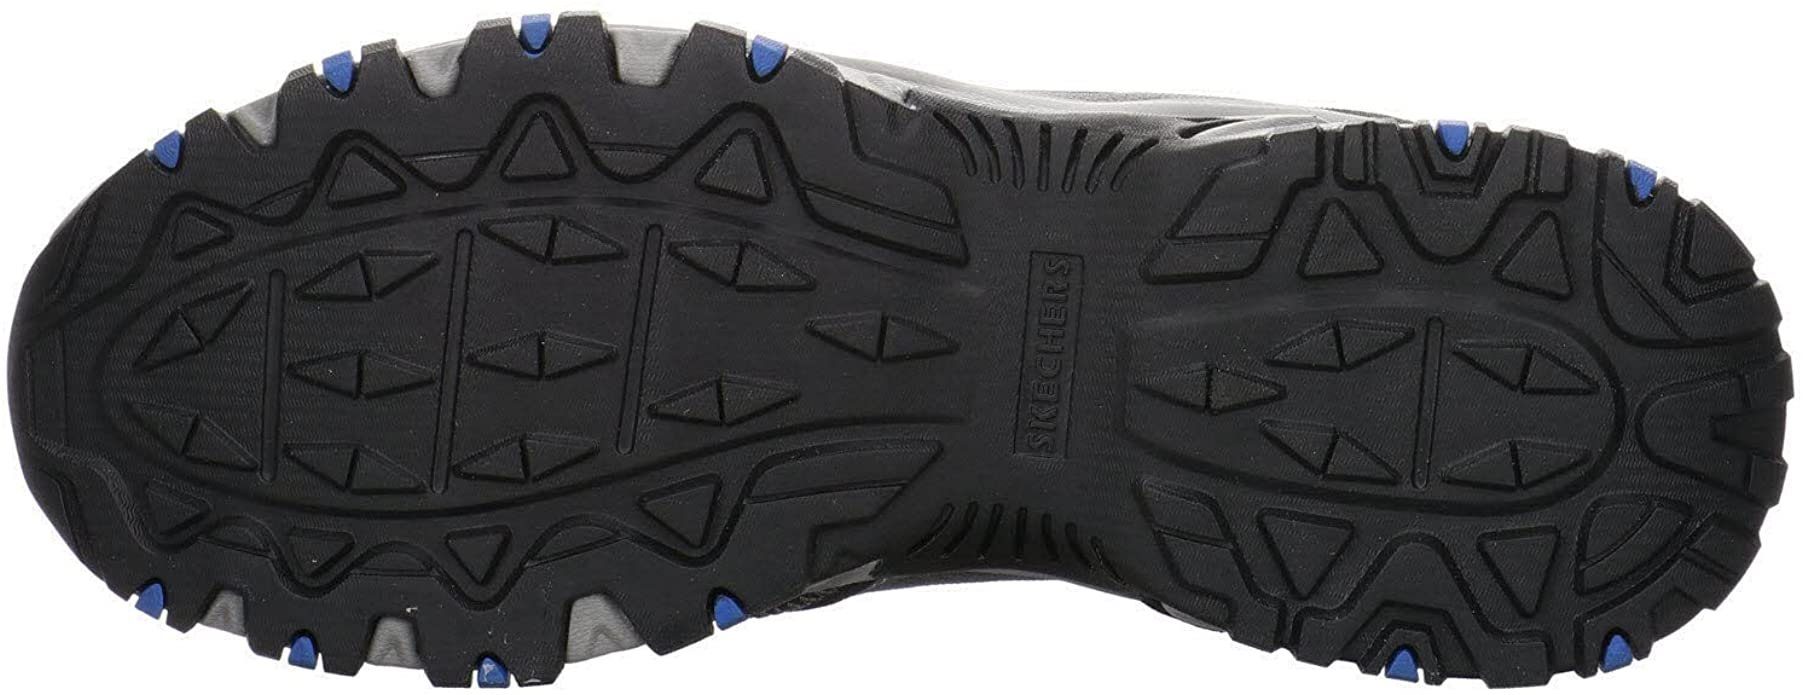 Sneaker Skechers black/charcoal